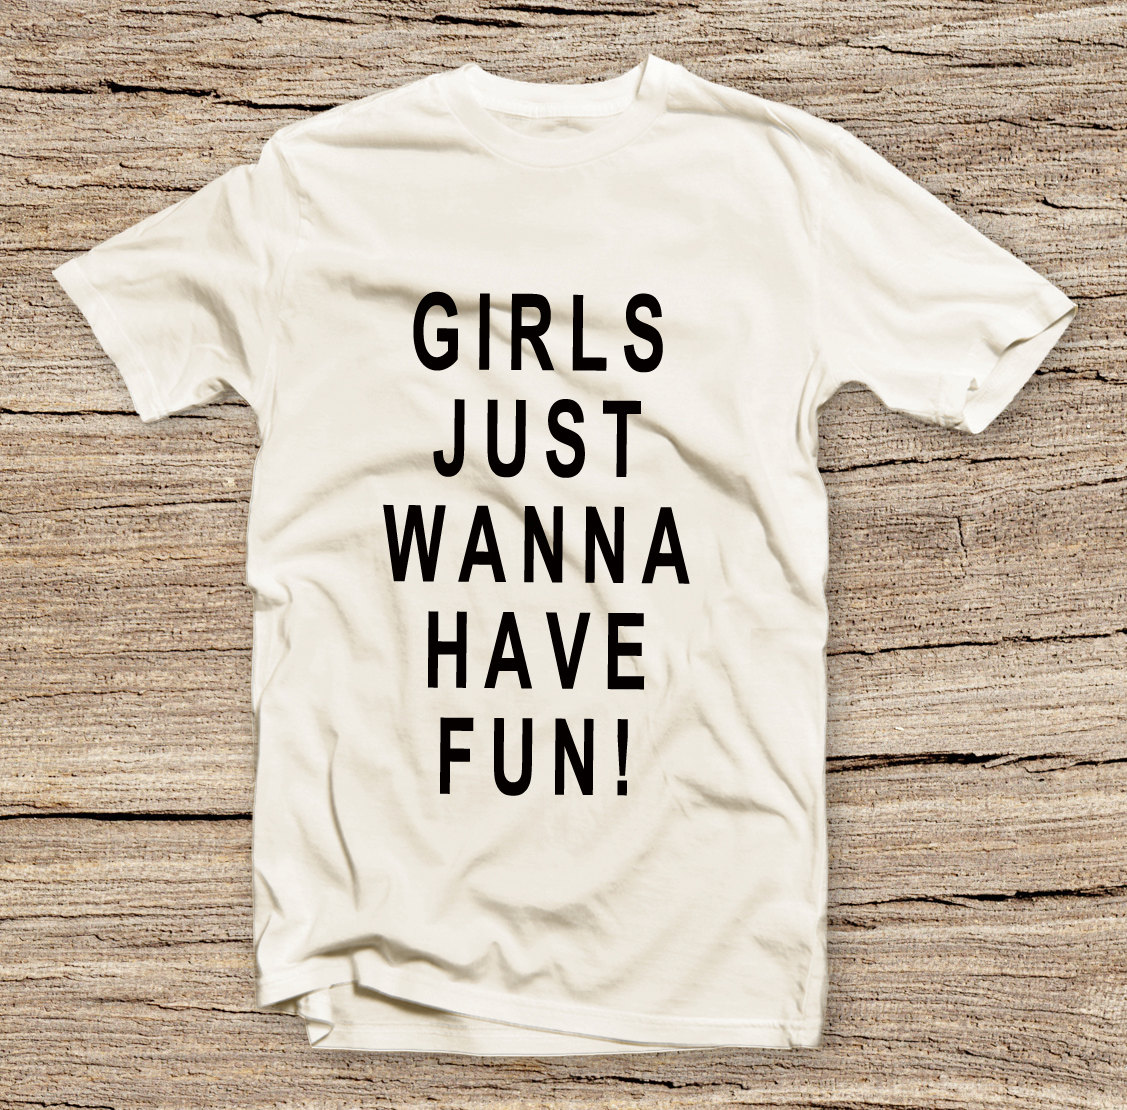 Pts-085 Just Wanna Have Fun T-shirt, Fashion Shirts, Funny T-shirt, Cute T-shirts